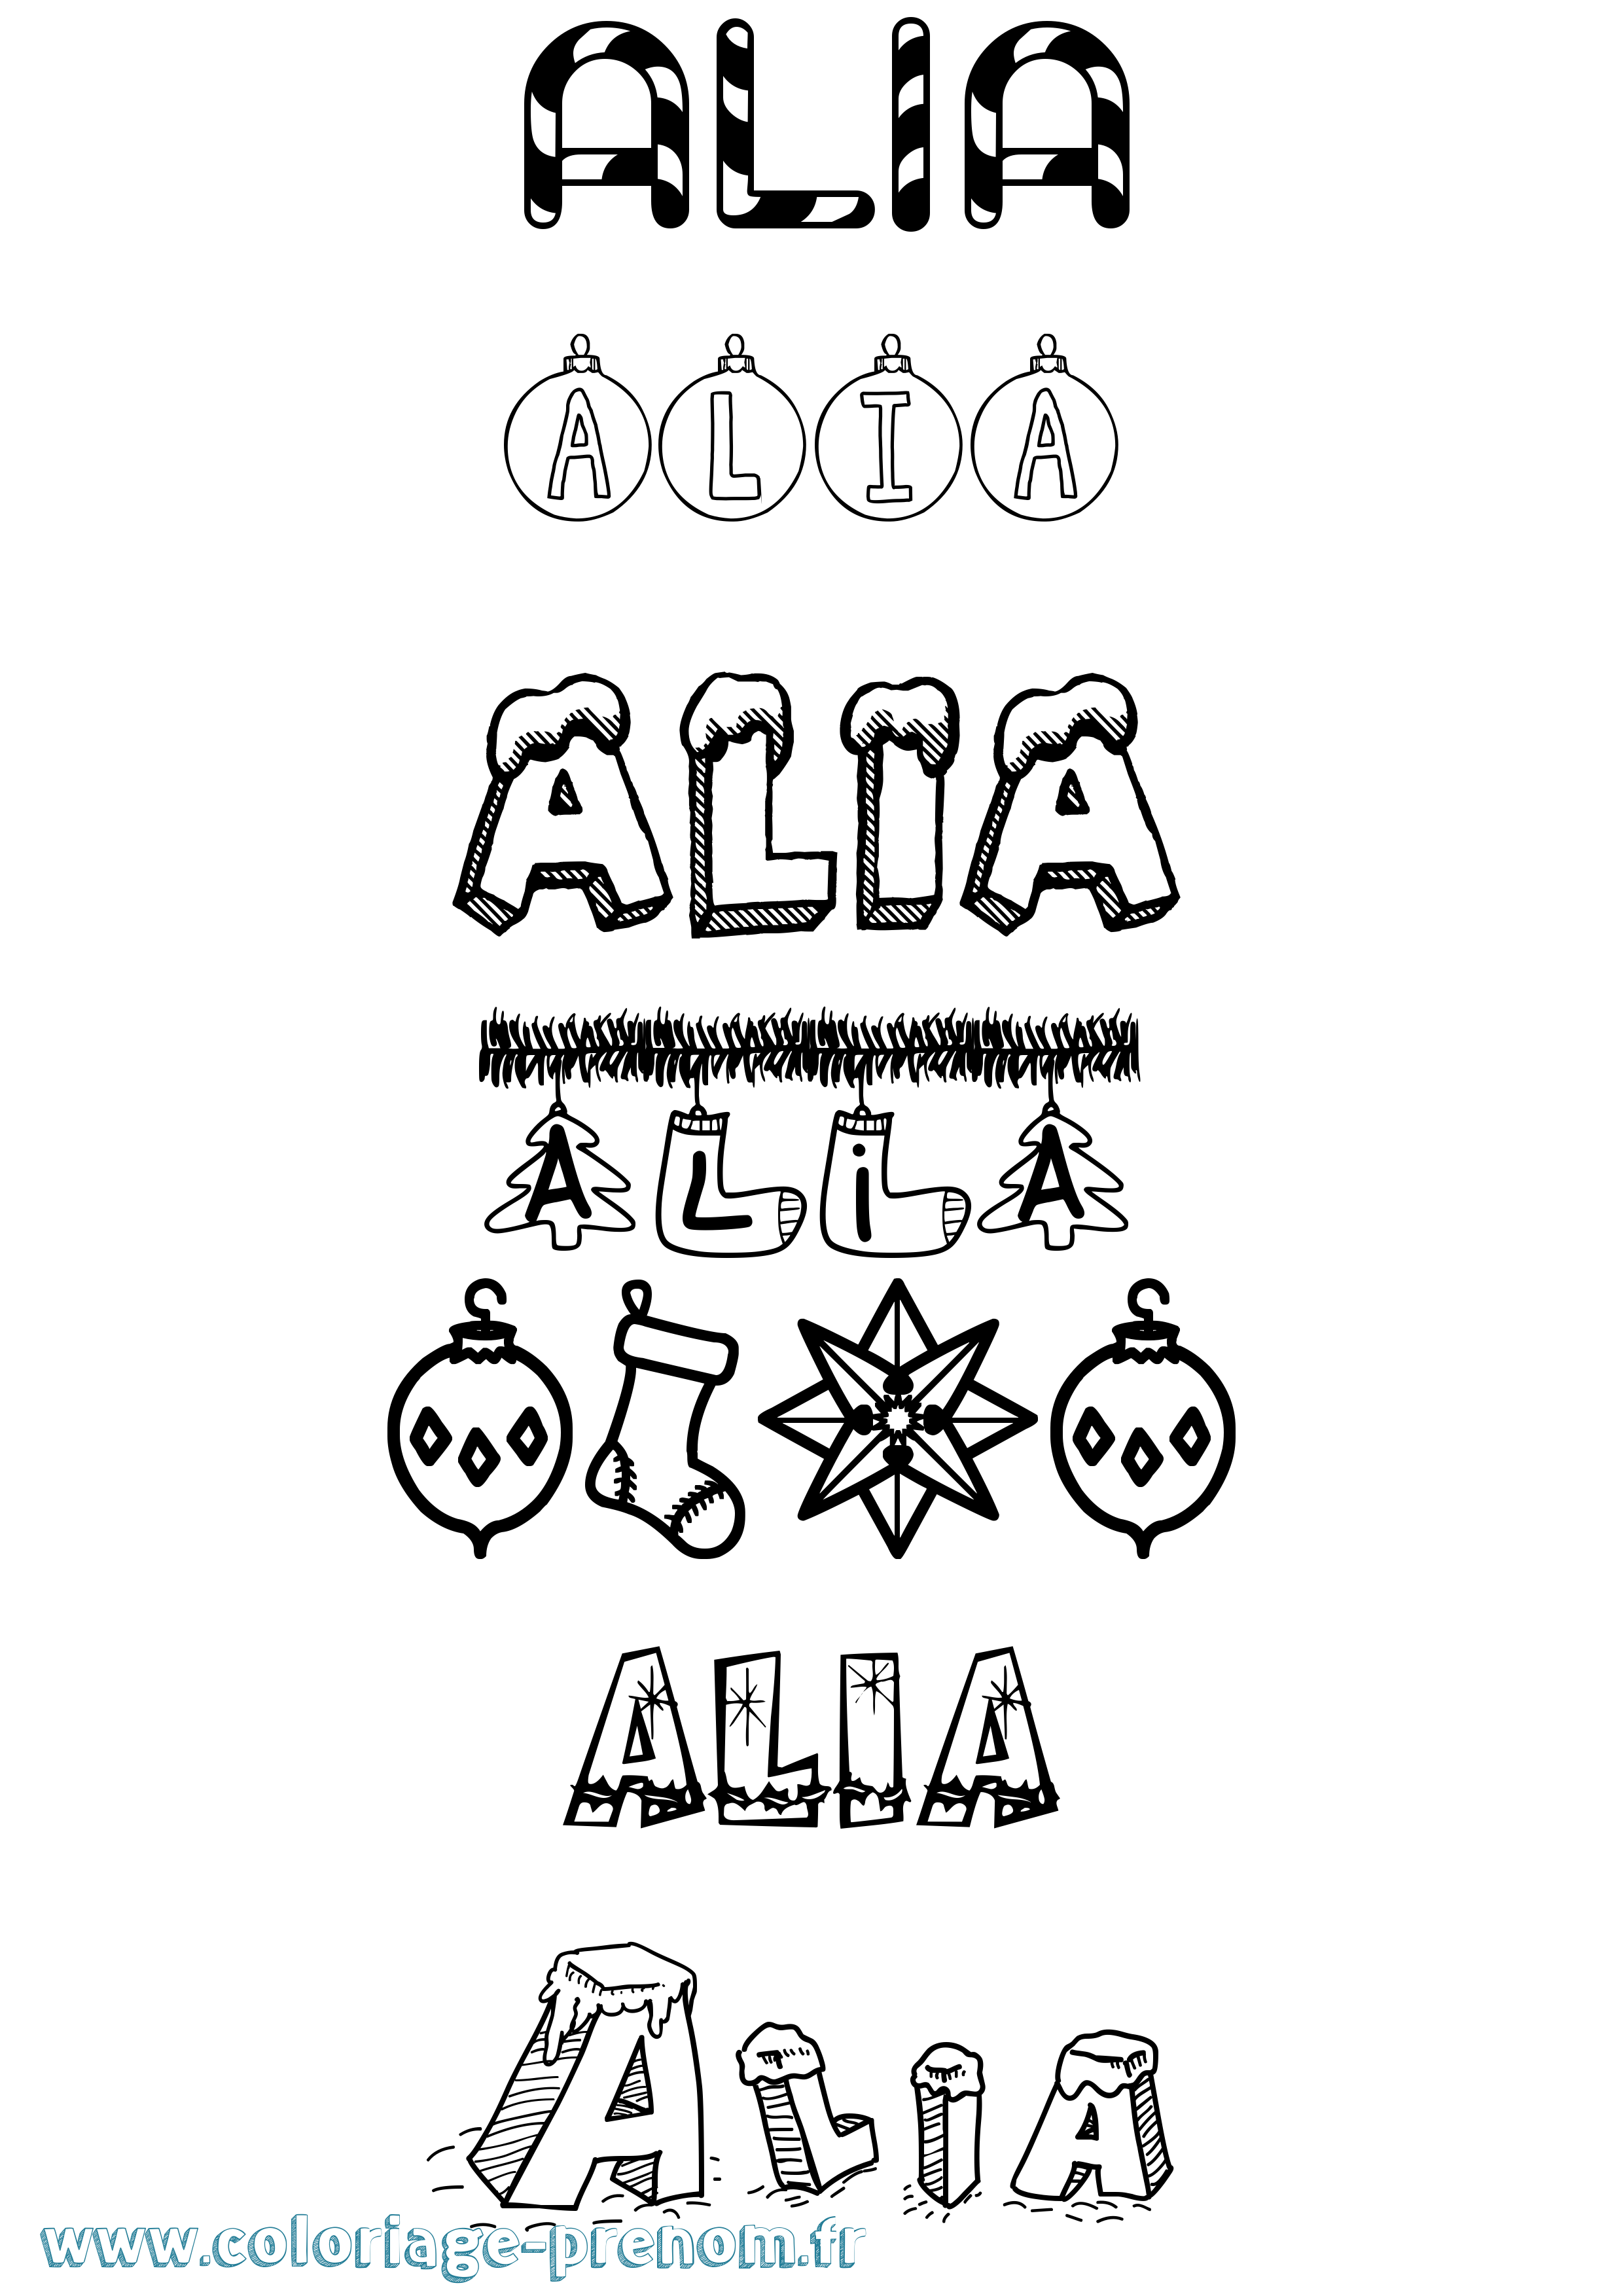 Coloriage prénom Alia